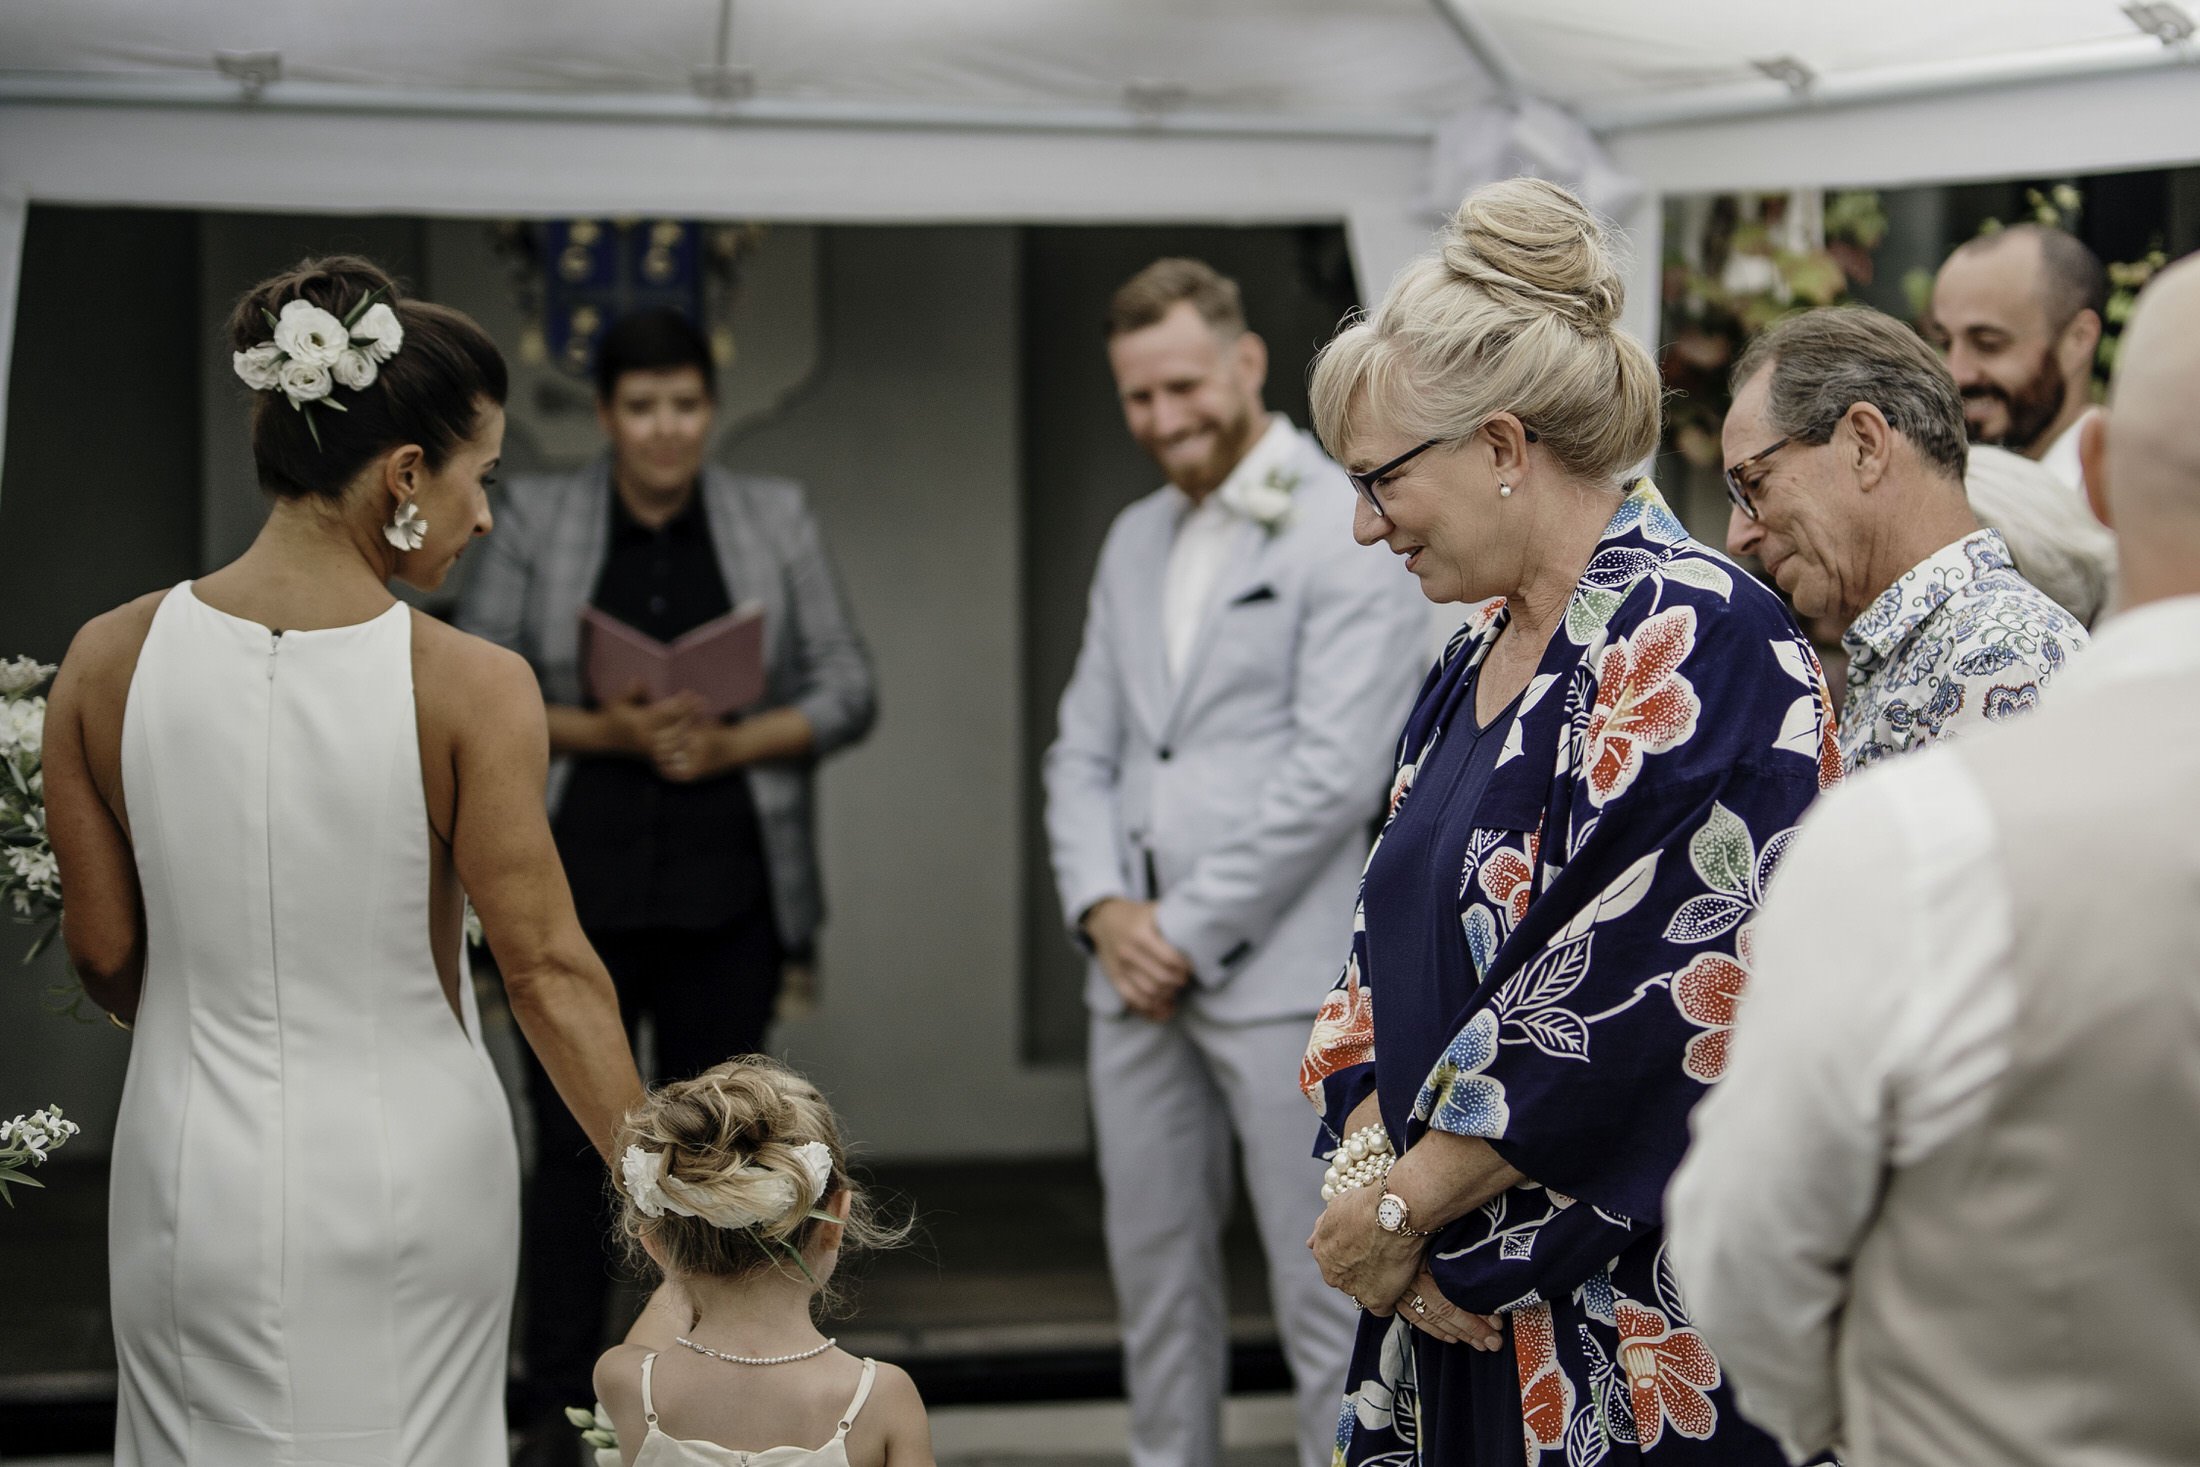 Auckland Wedding Photographer | Auckland Wedding Videographer | CBD Remuera Wedding Venue | Pax Remuera | Auckland Venue | Auckland Photographer